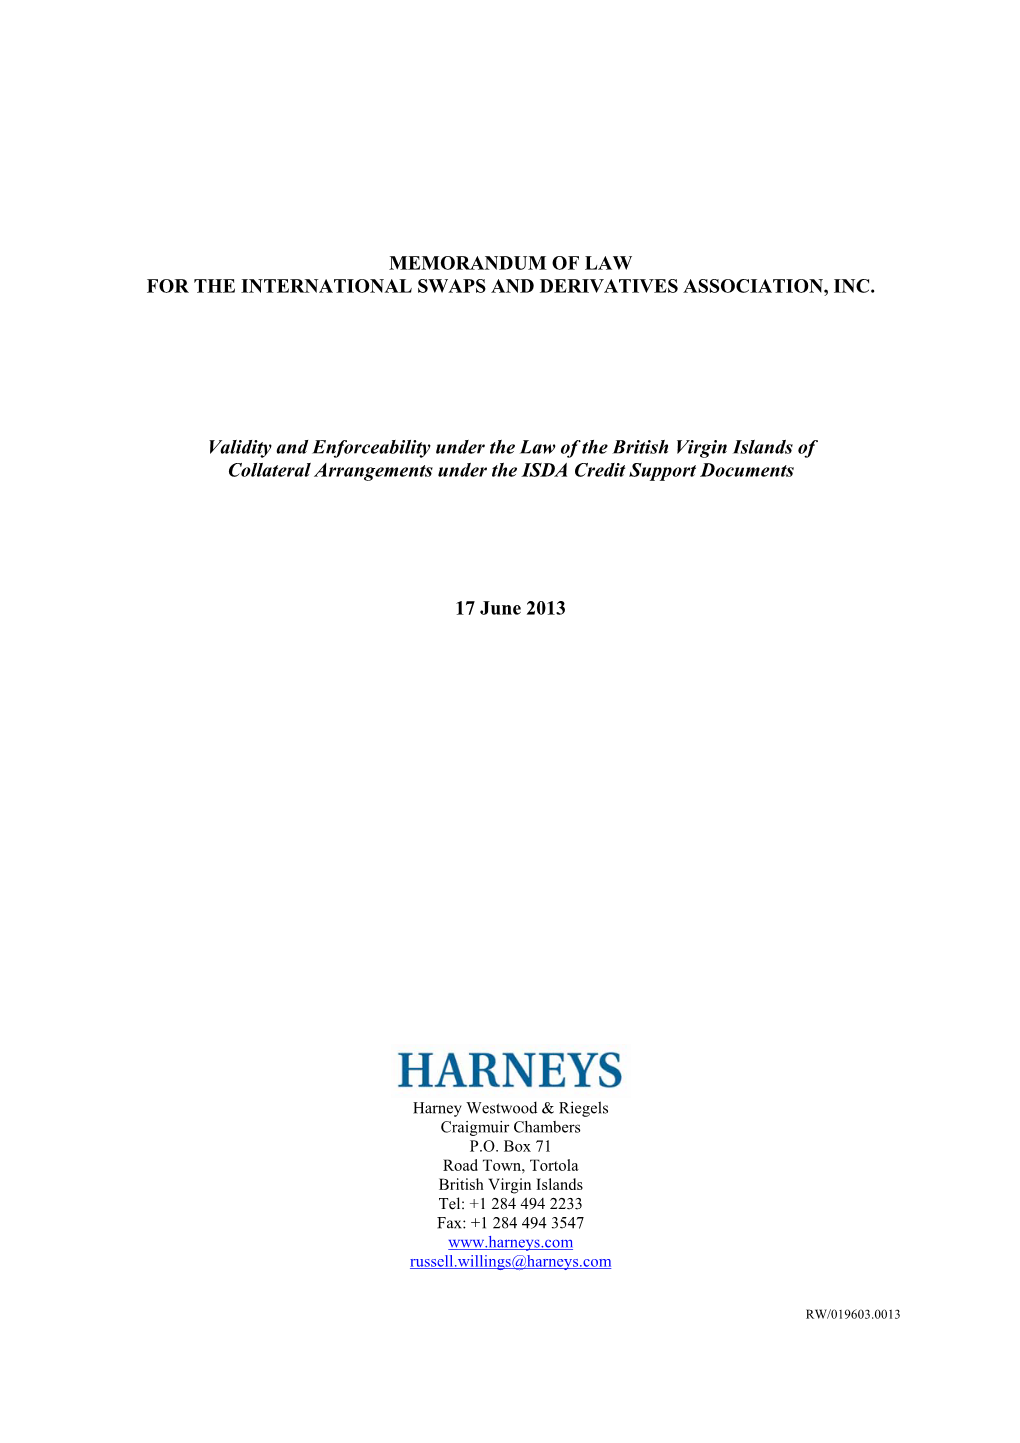 Memorandum of Law for the International Swaps and Derivatives Association, Inc